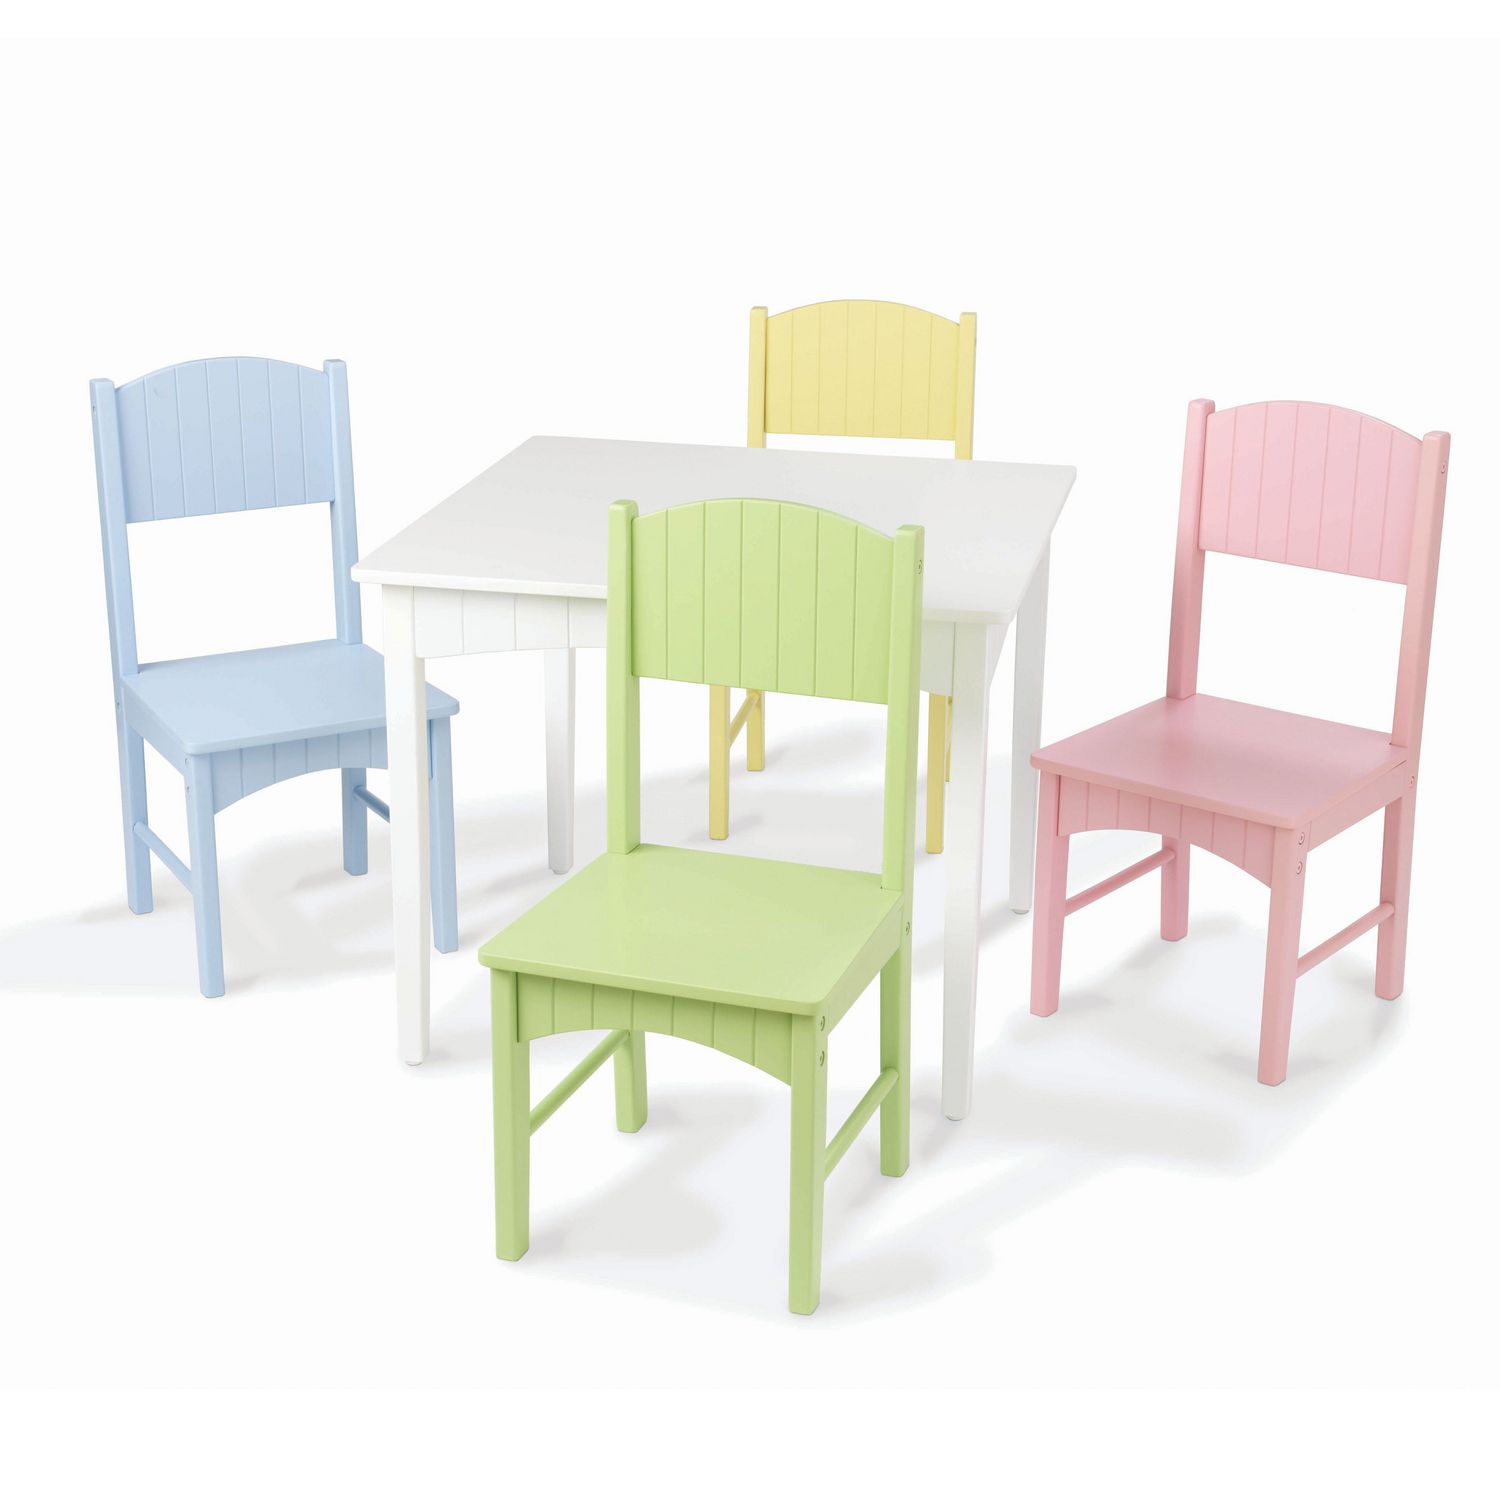 kidkraft nantucket table & 4 pastel chairs